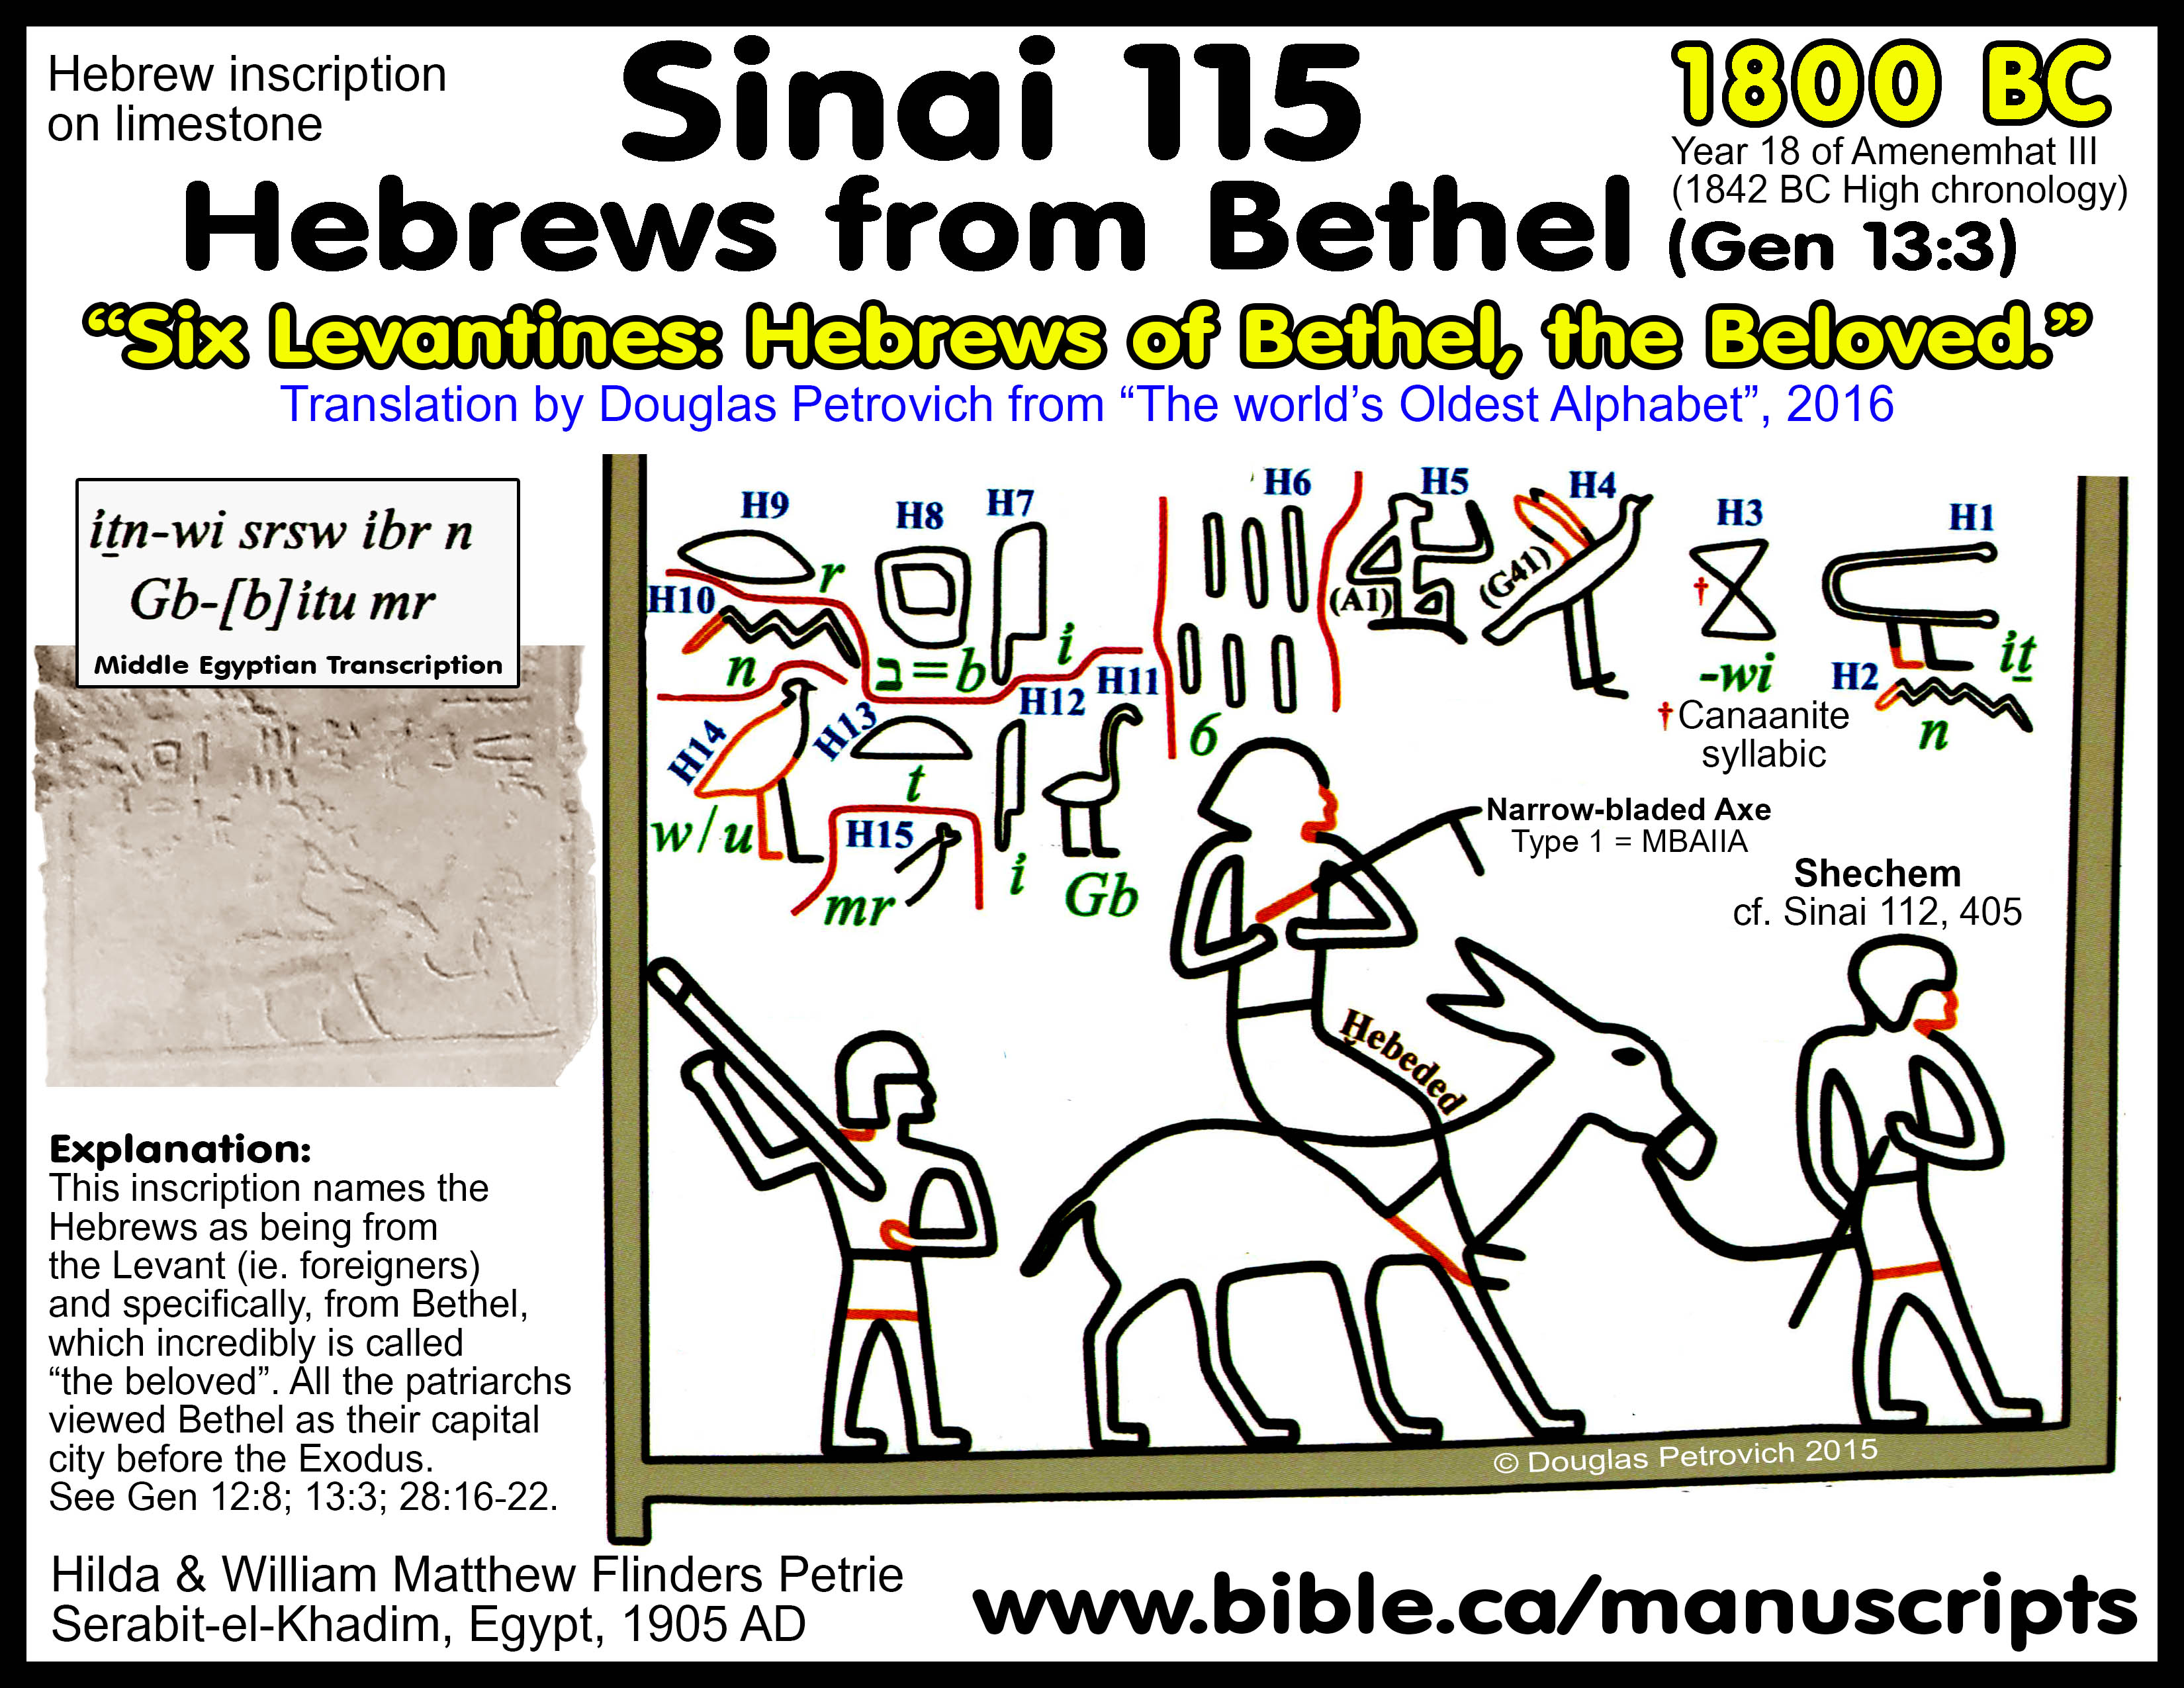 bible-inscriptions-archeology-Hebrew-Sinai-115-turquoise-mine-Serabit-el-Khadim-6-six-levantines-Hebrews-of-from-Bethel-the-beloved-Hebeded-Shechem-Douglas-Petrovich-1842bc.jpg